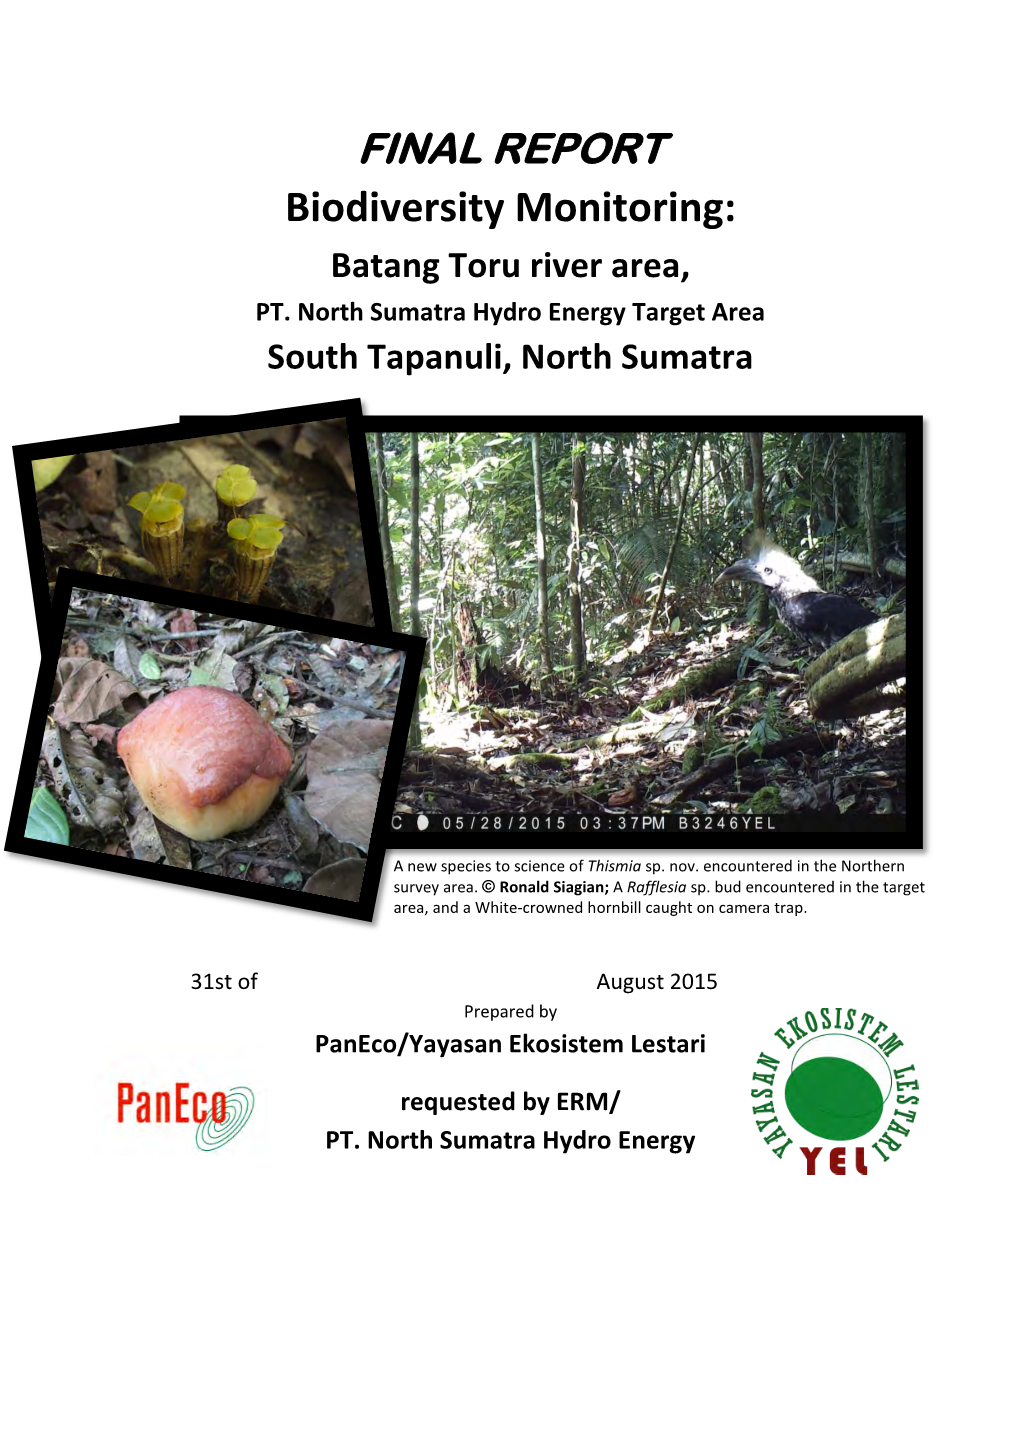 Biodiversity Monitoring: Batang Toru River Area, PT